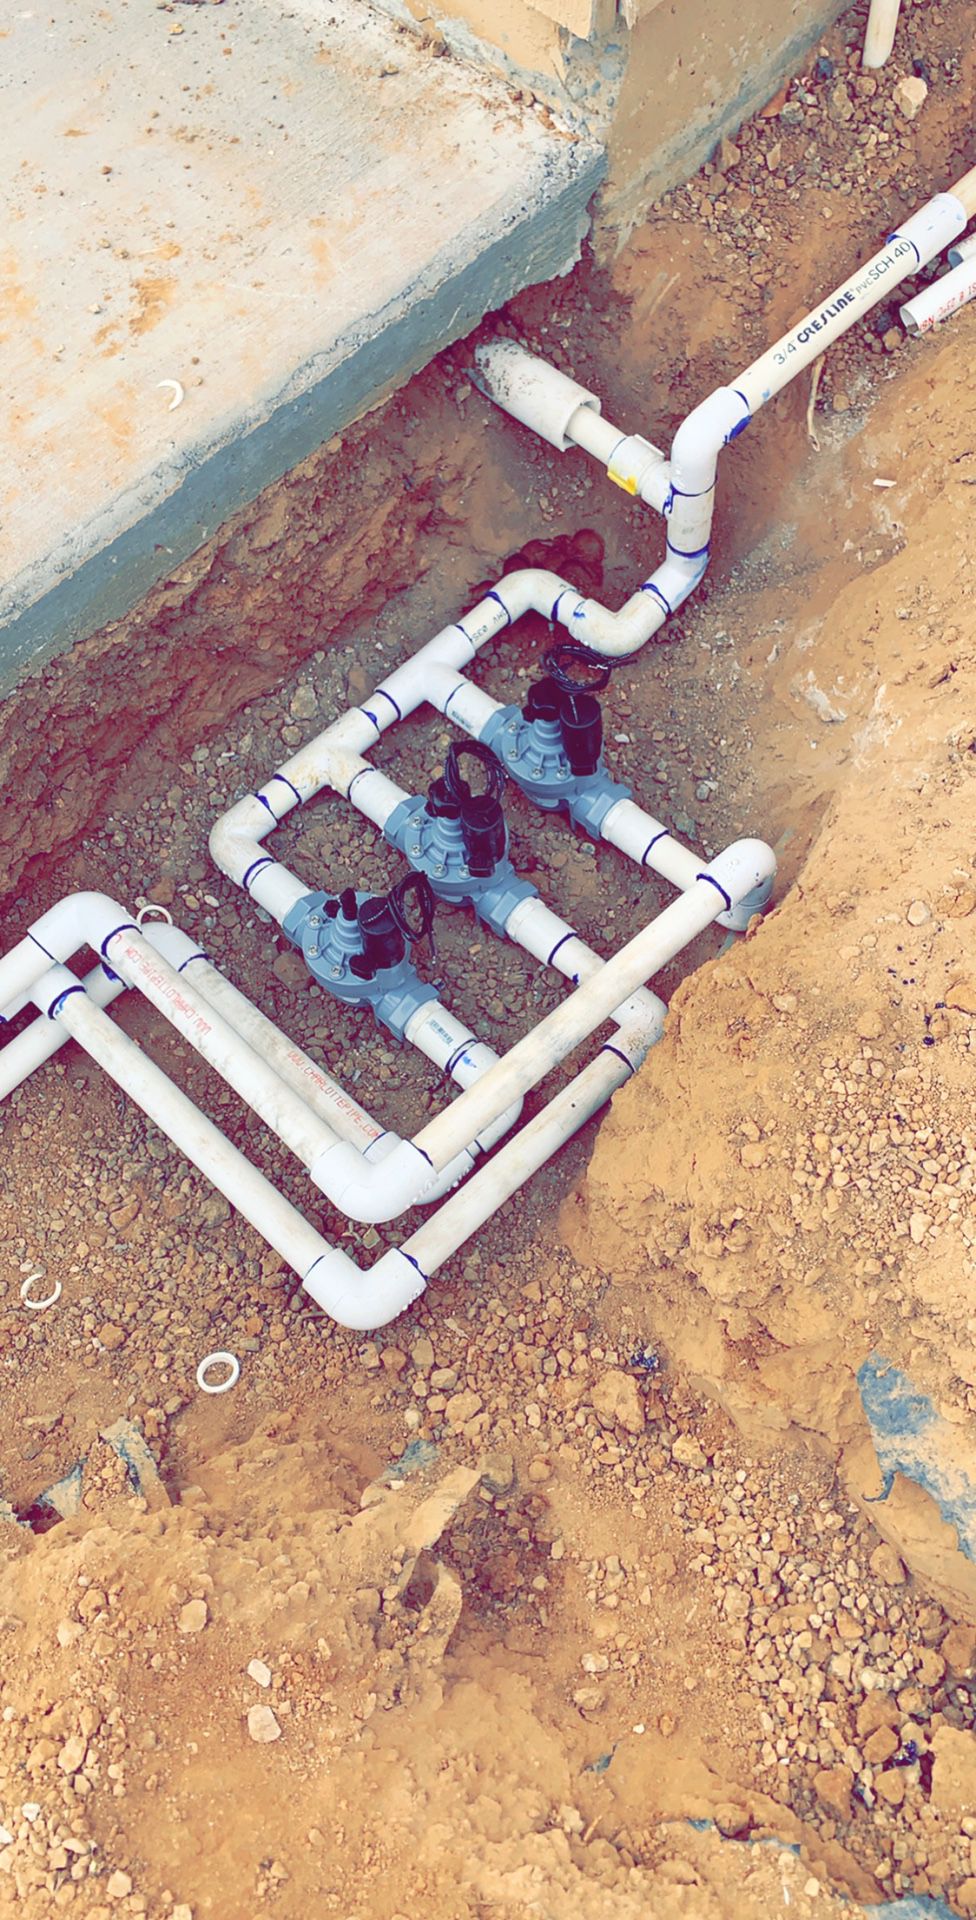 Valves / irrigation / sprinklers